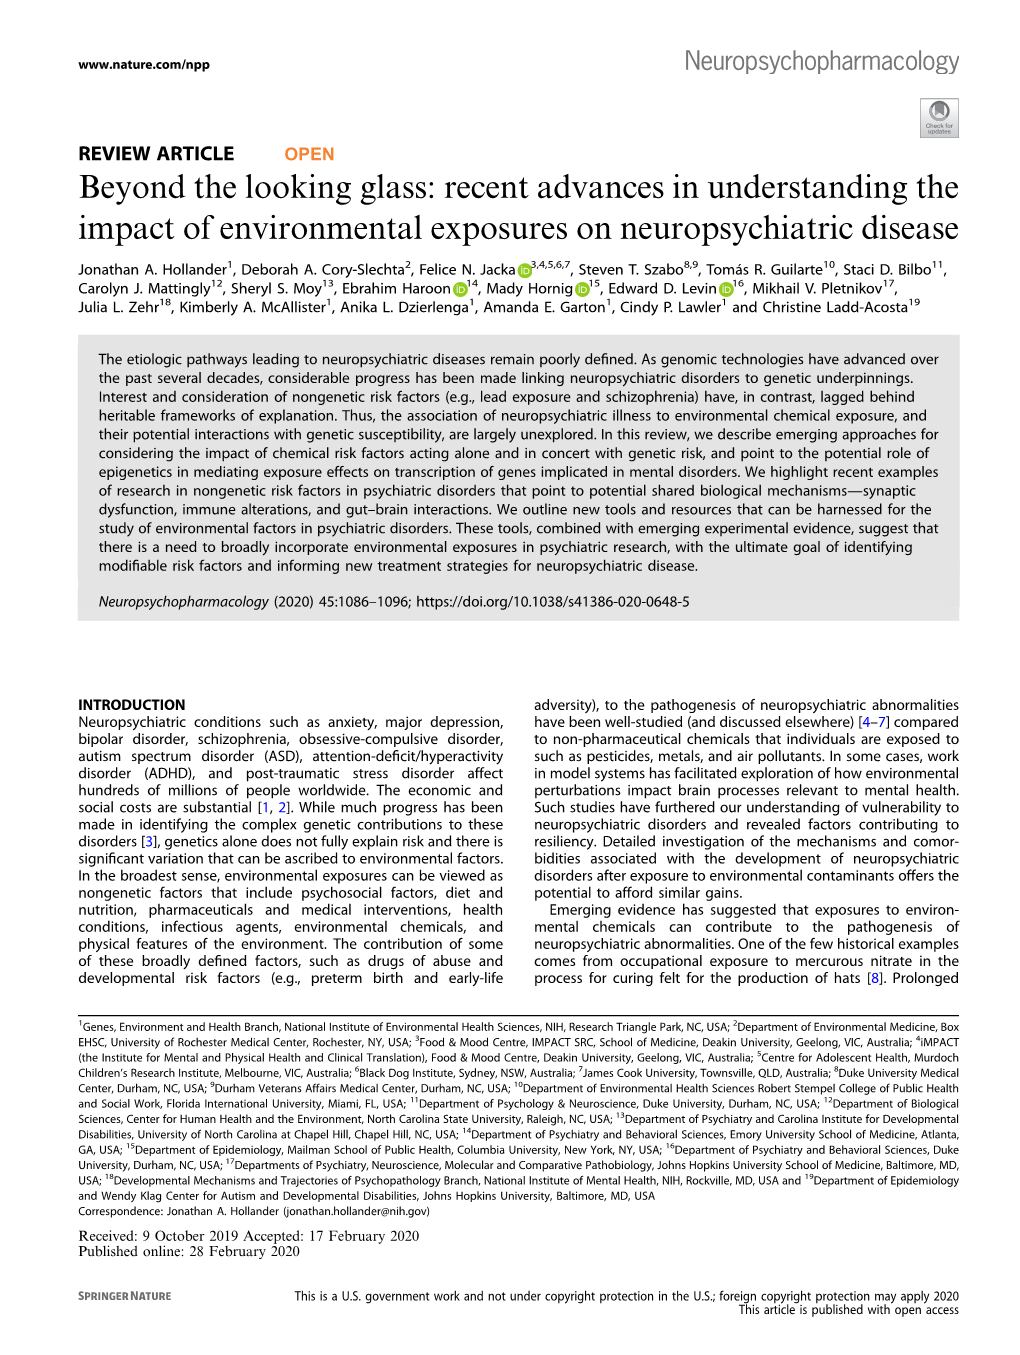 Recent Advances in Understanding the Impact of Environmental Exposures on Neuropsychiatric Disease